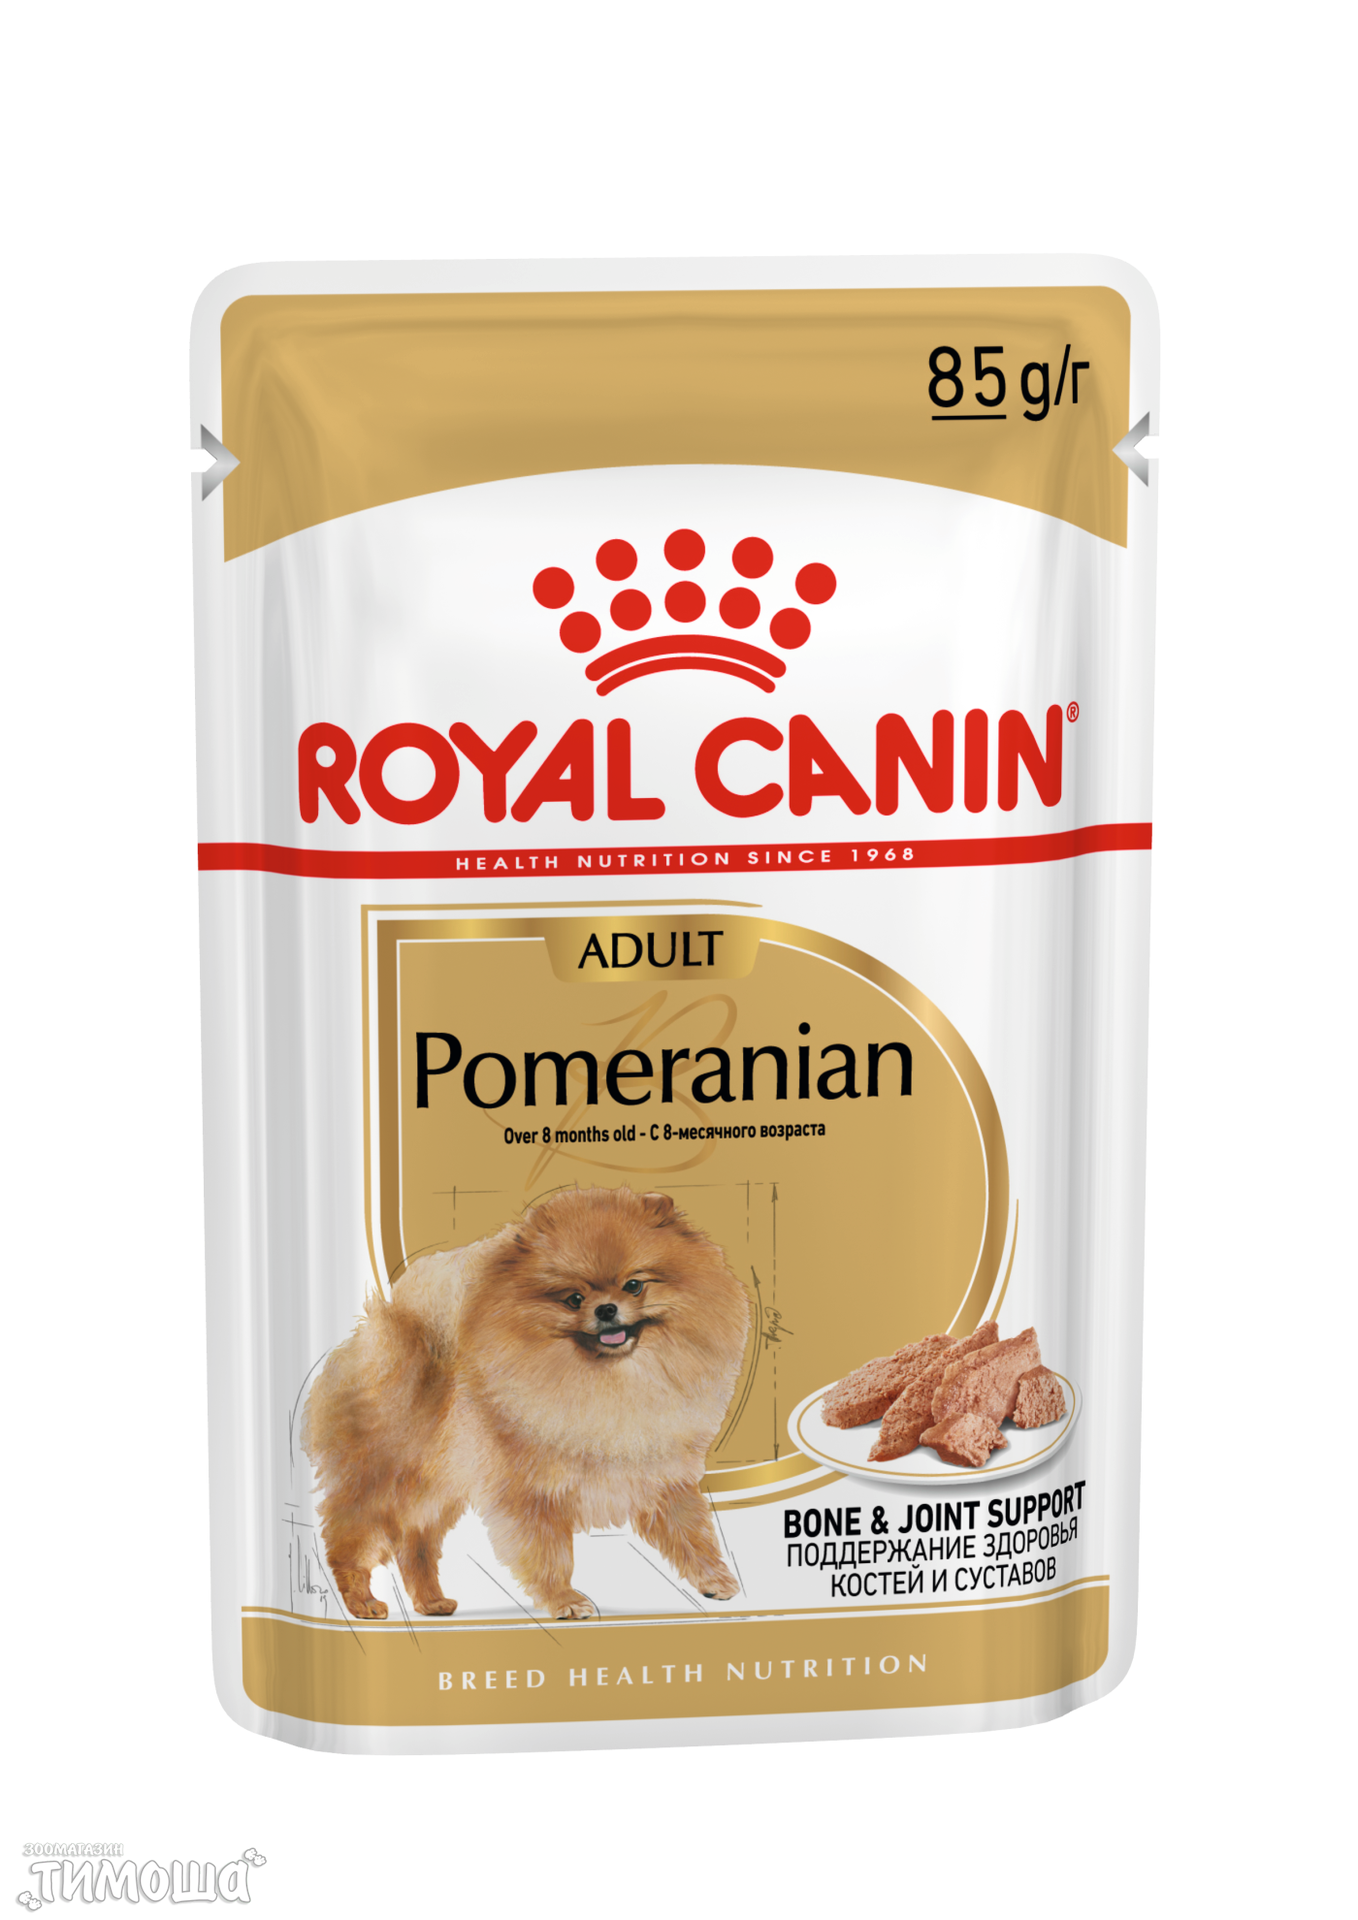 Royal Canin Pomeranian Померанский шпиц (в паштете)